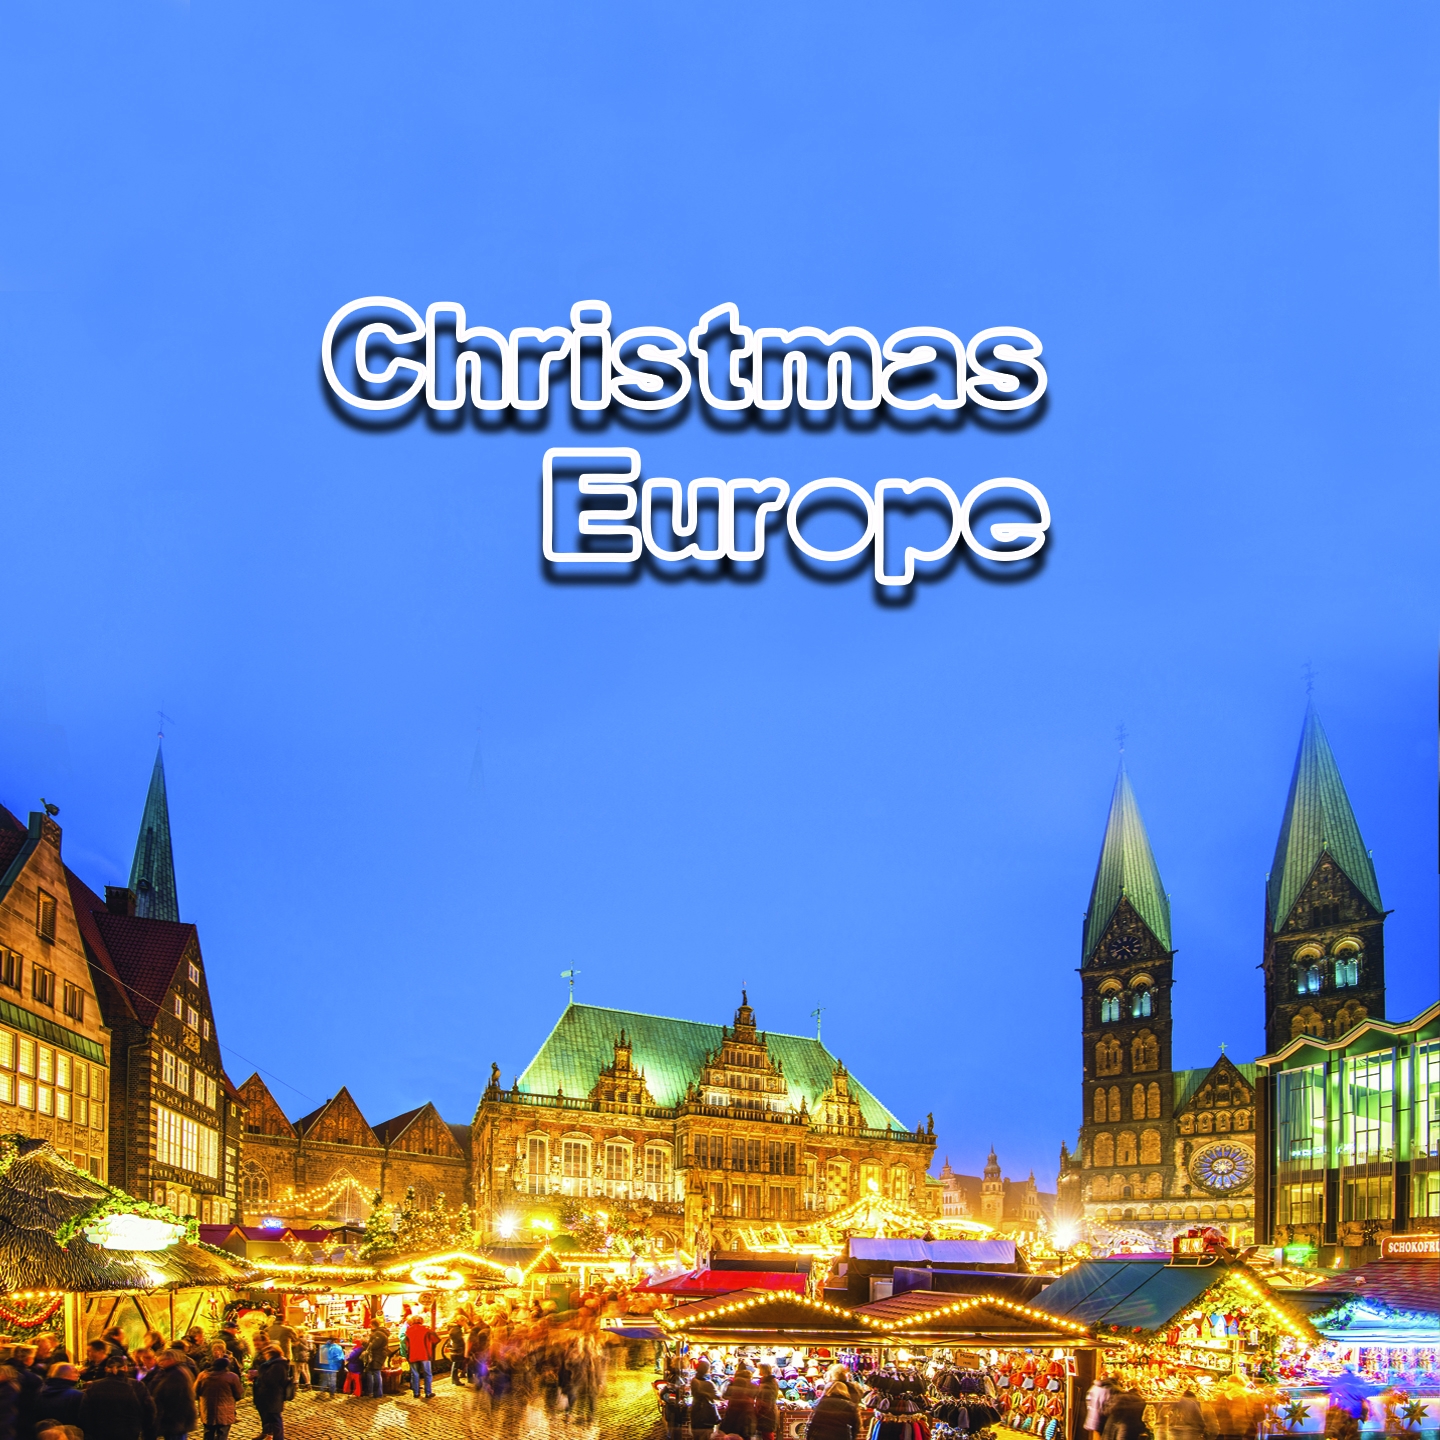 0 - Christmas Europe (Christmas Atmosphere)